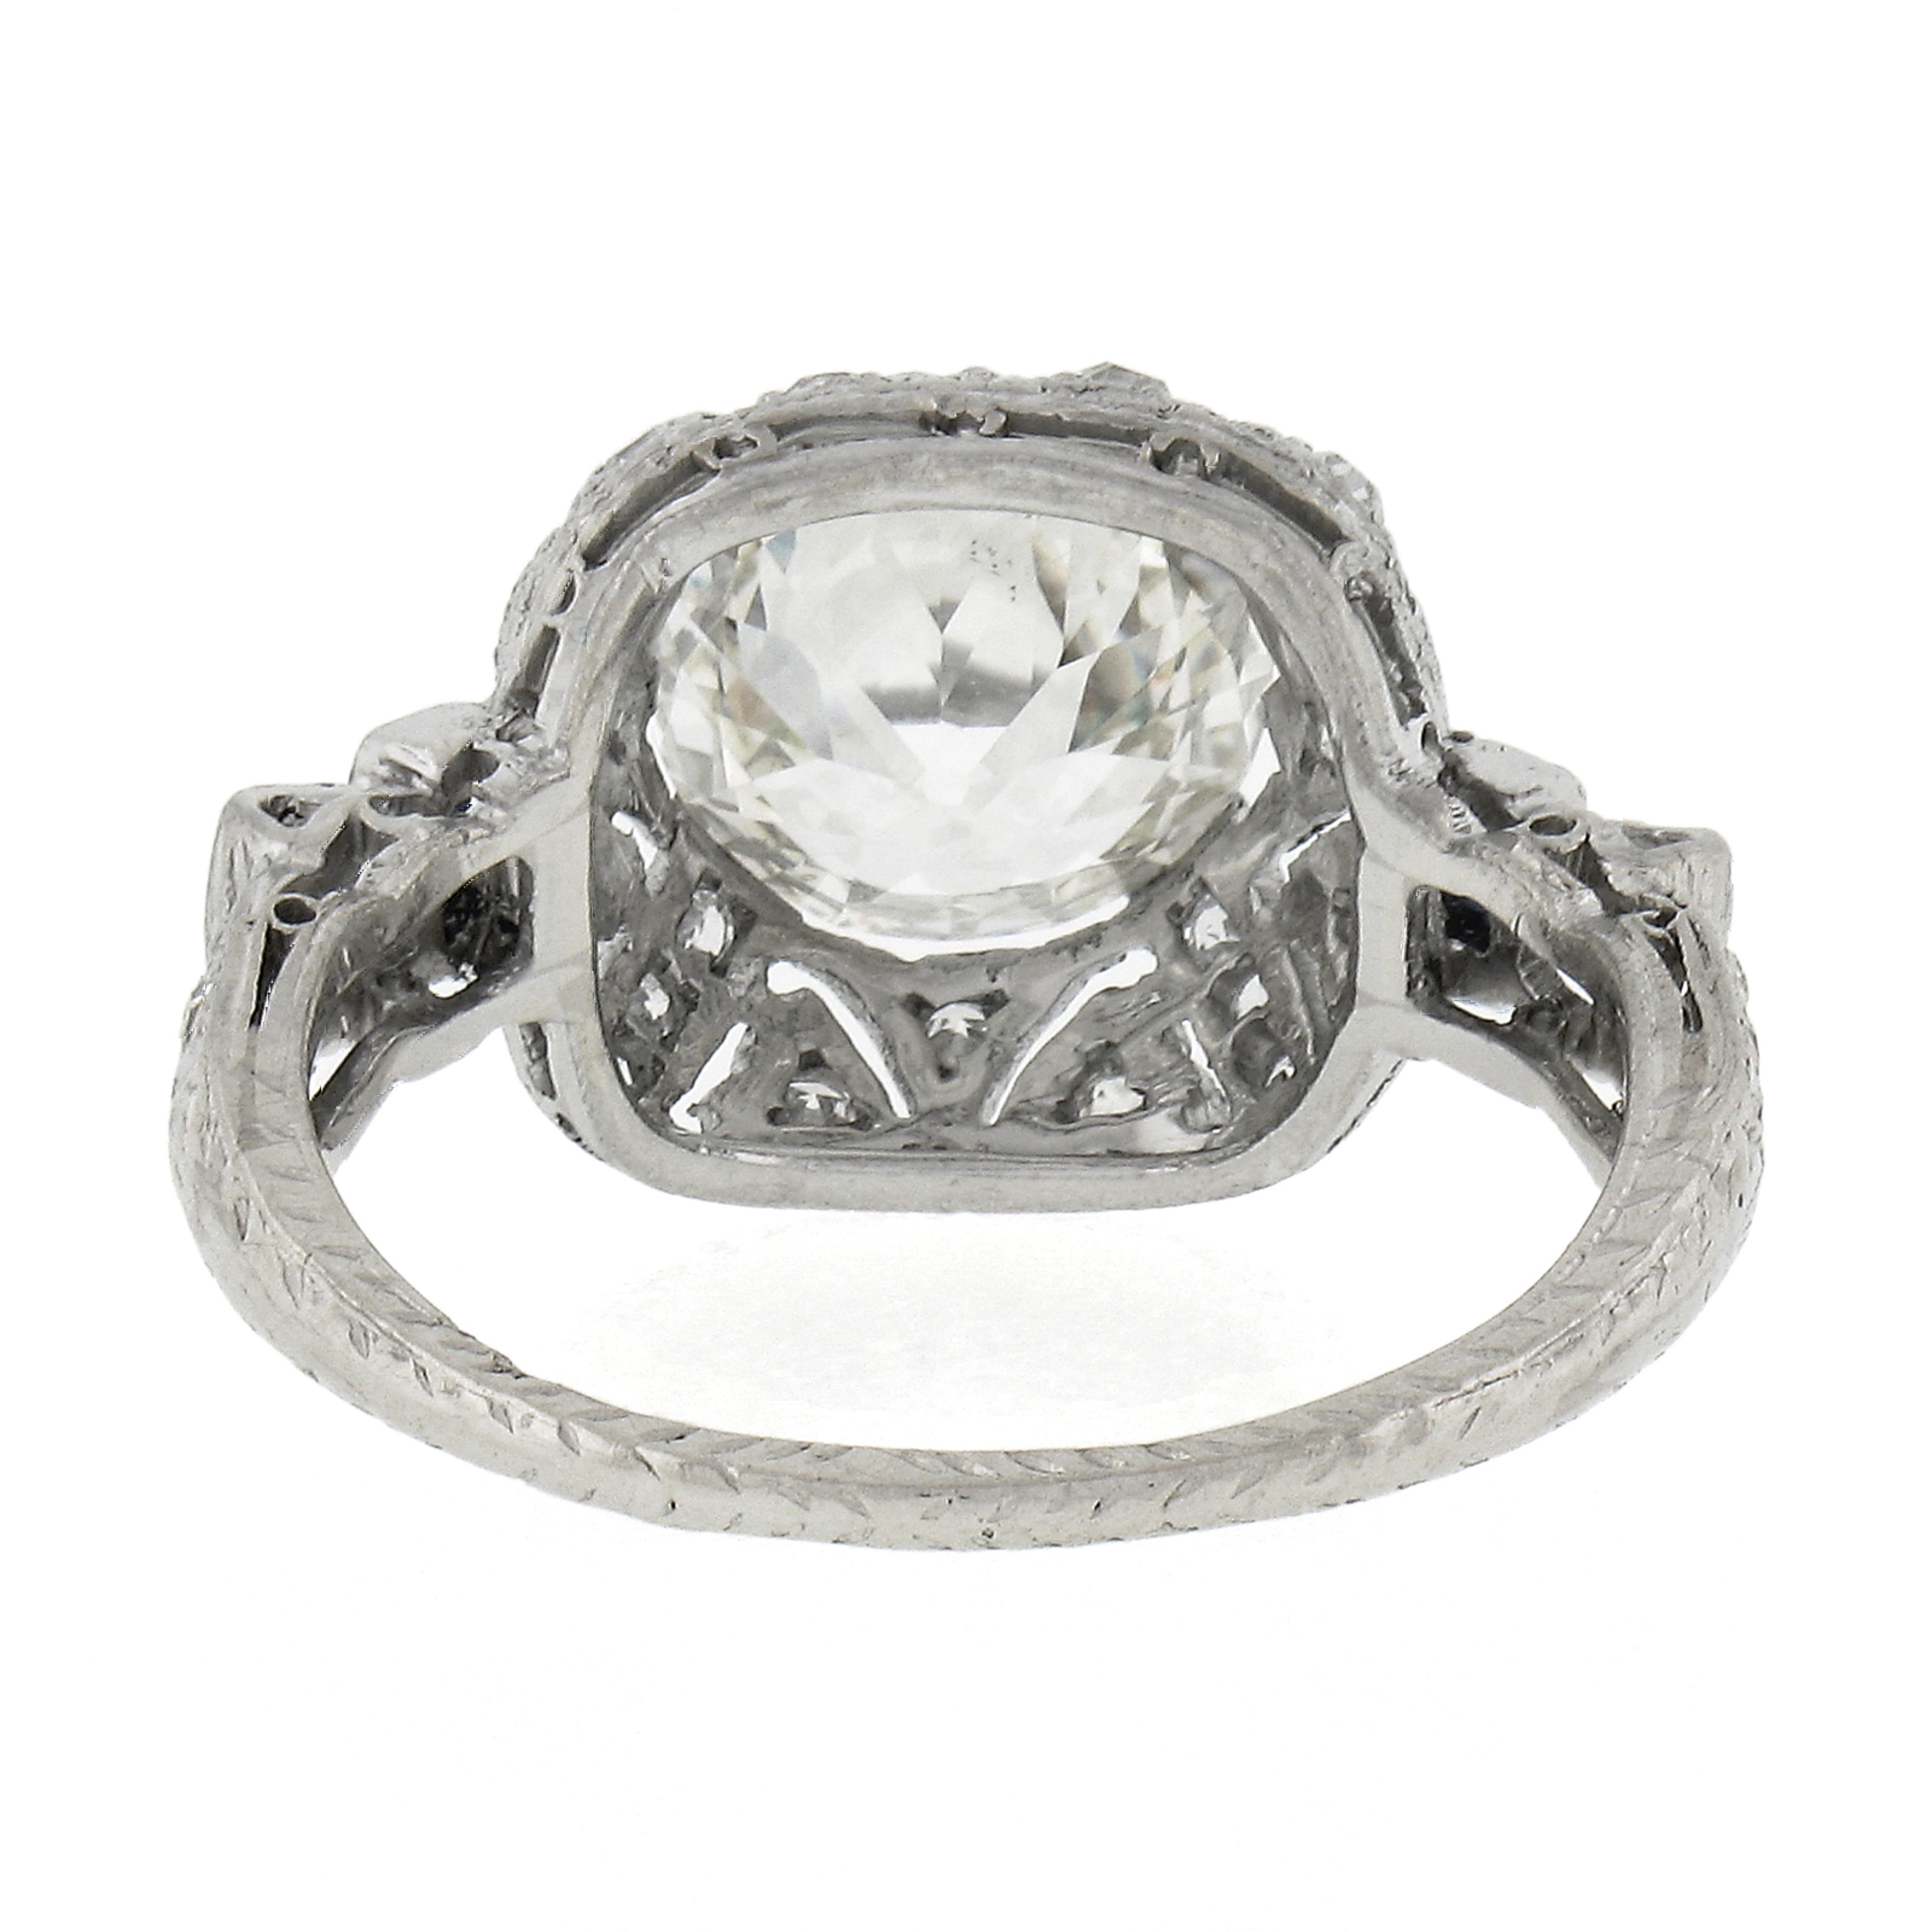 Antique Platinum GIA Old European Cut Diamond Puffed Cushion Engagement Ring 1